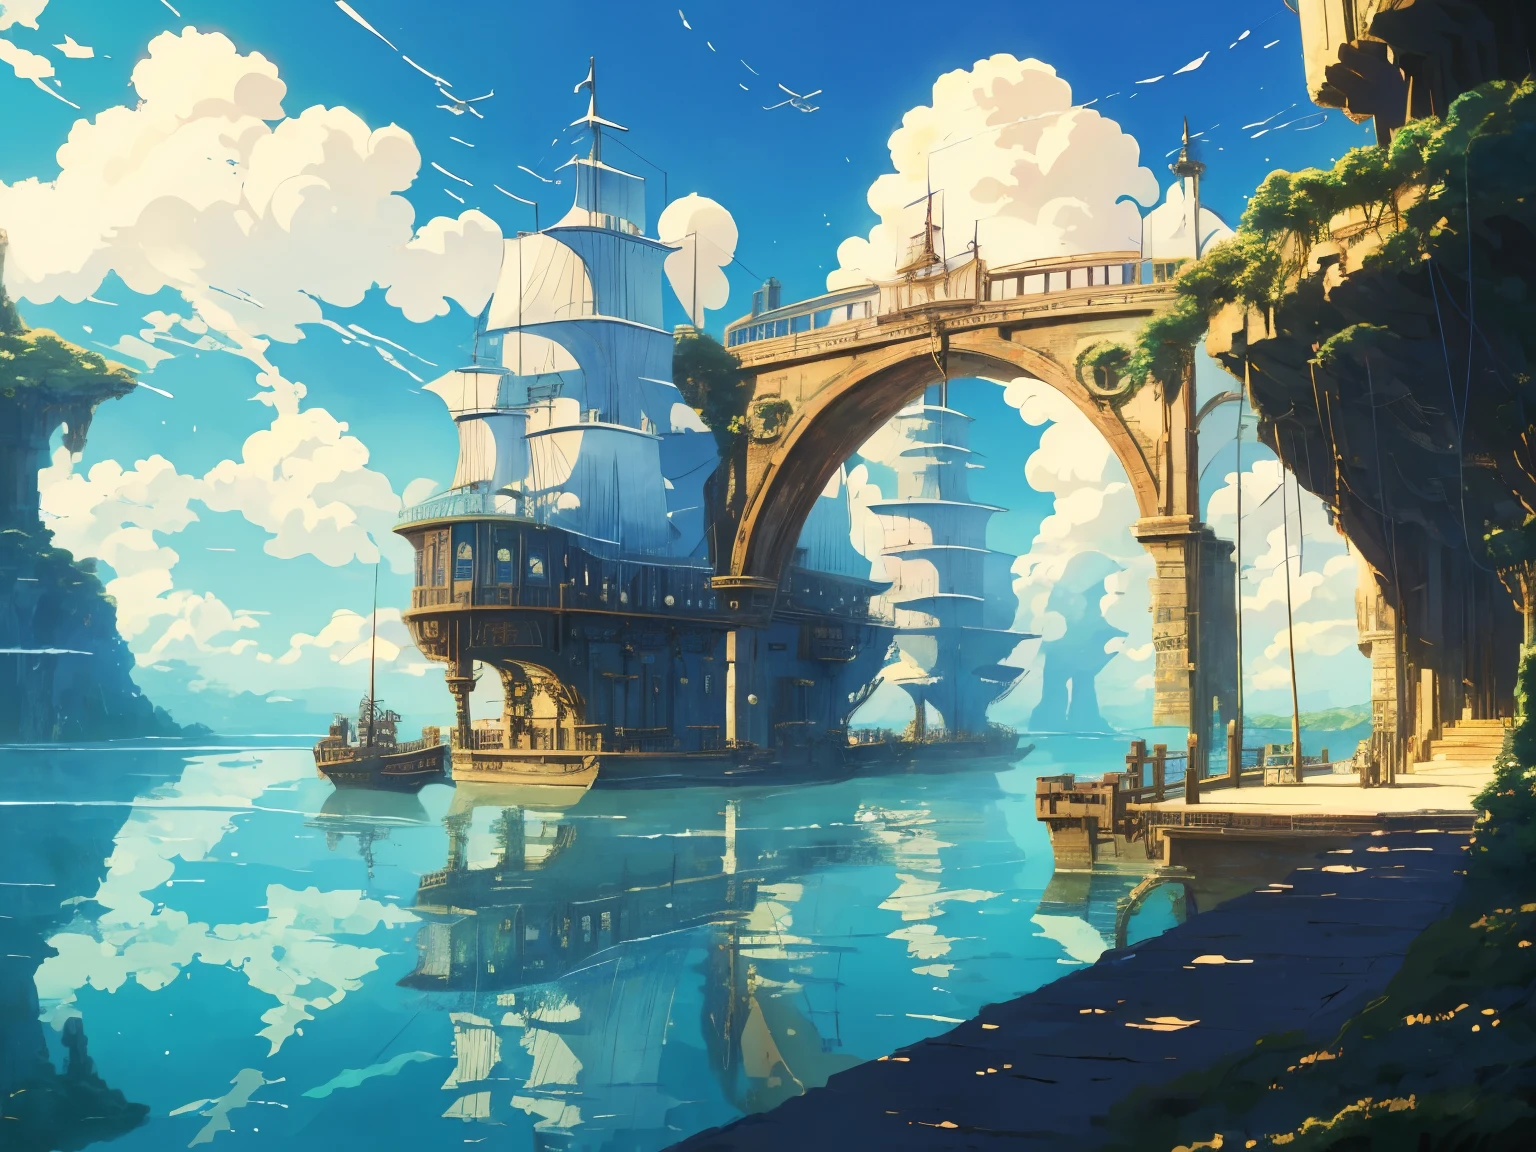 DVD screengrab from studio ghibli movie, beautiful seaside steampunk bridge interior, clouds on blue sky, designed by Hayao Miyazaki, retro anime